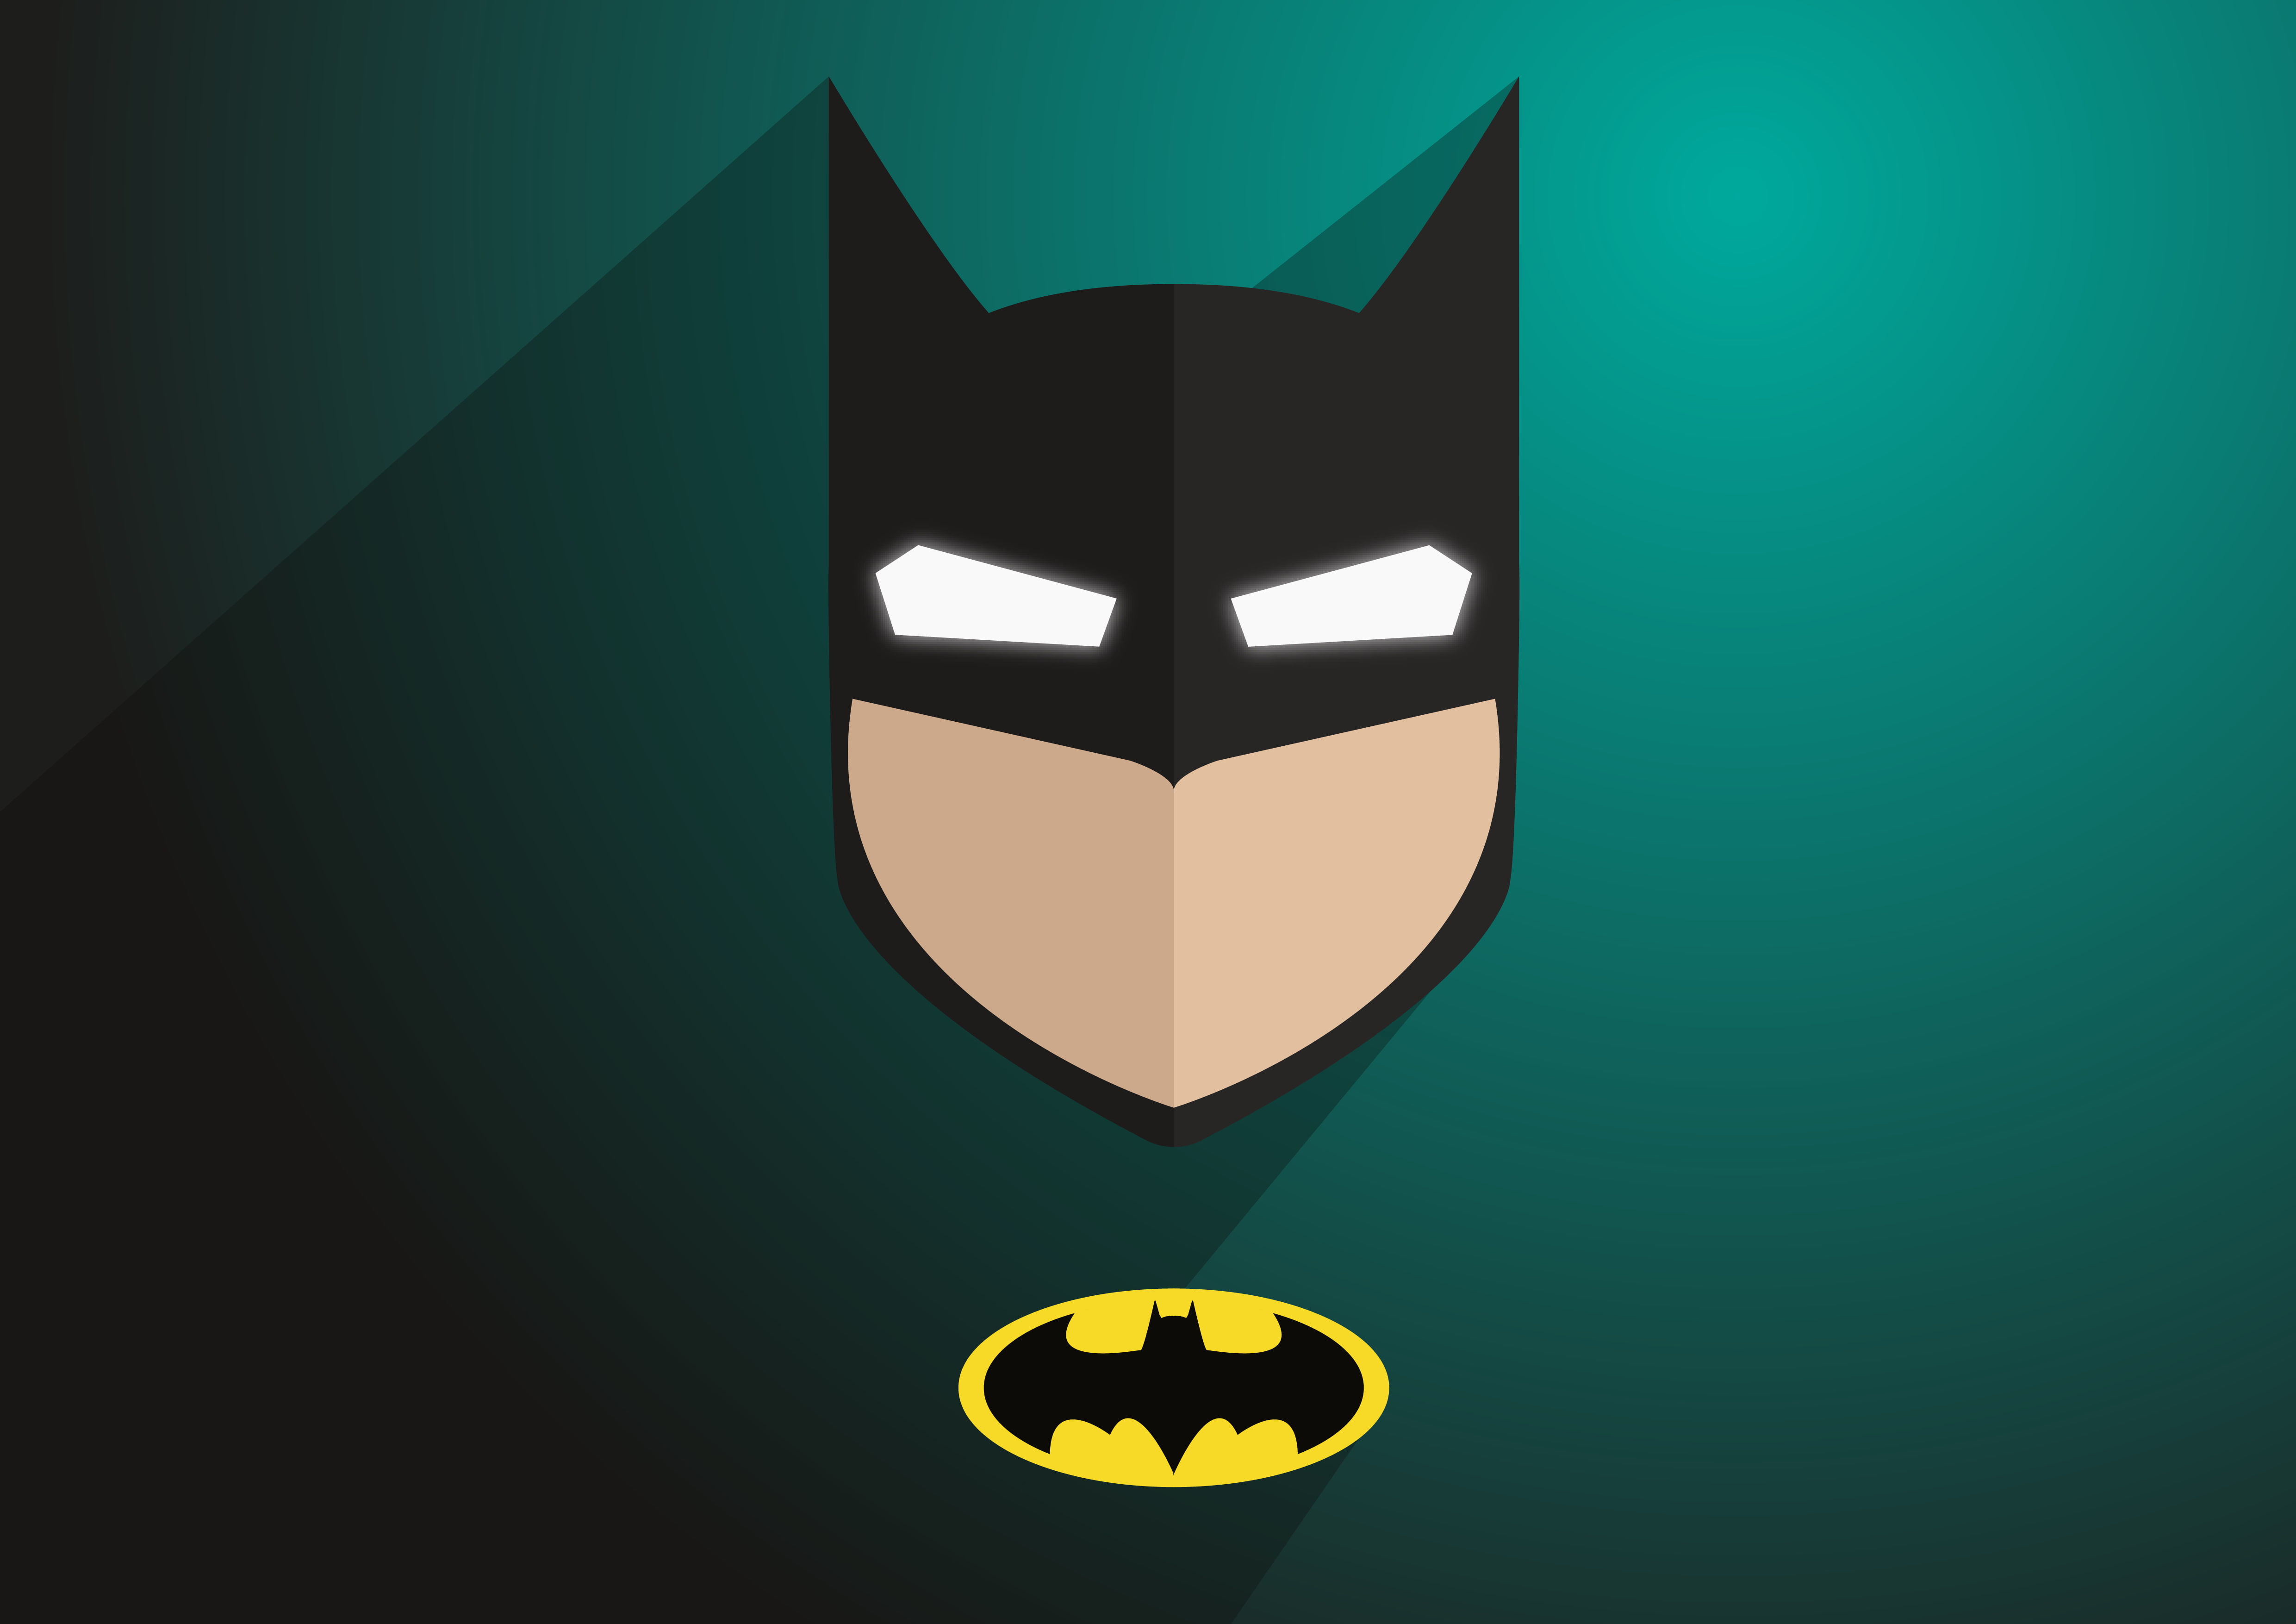 Batman logo, minimalism, glowing eyes, mask